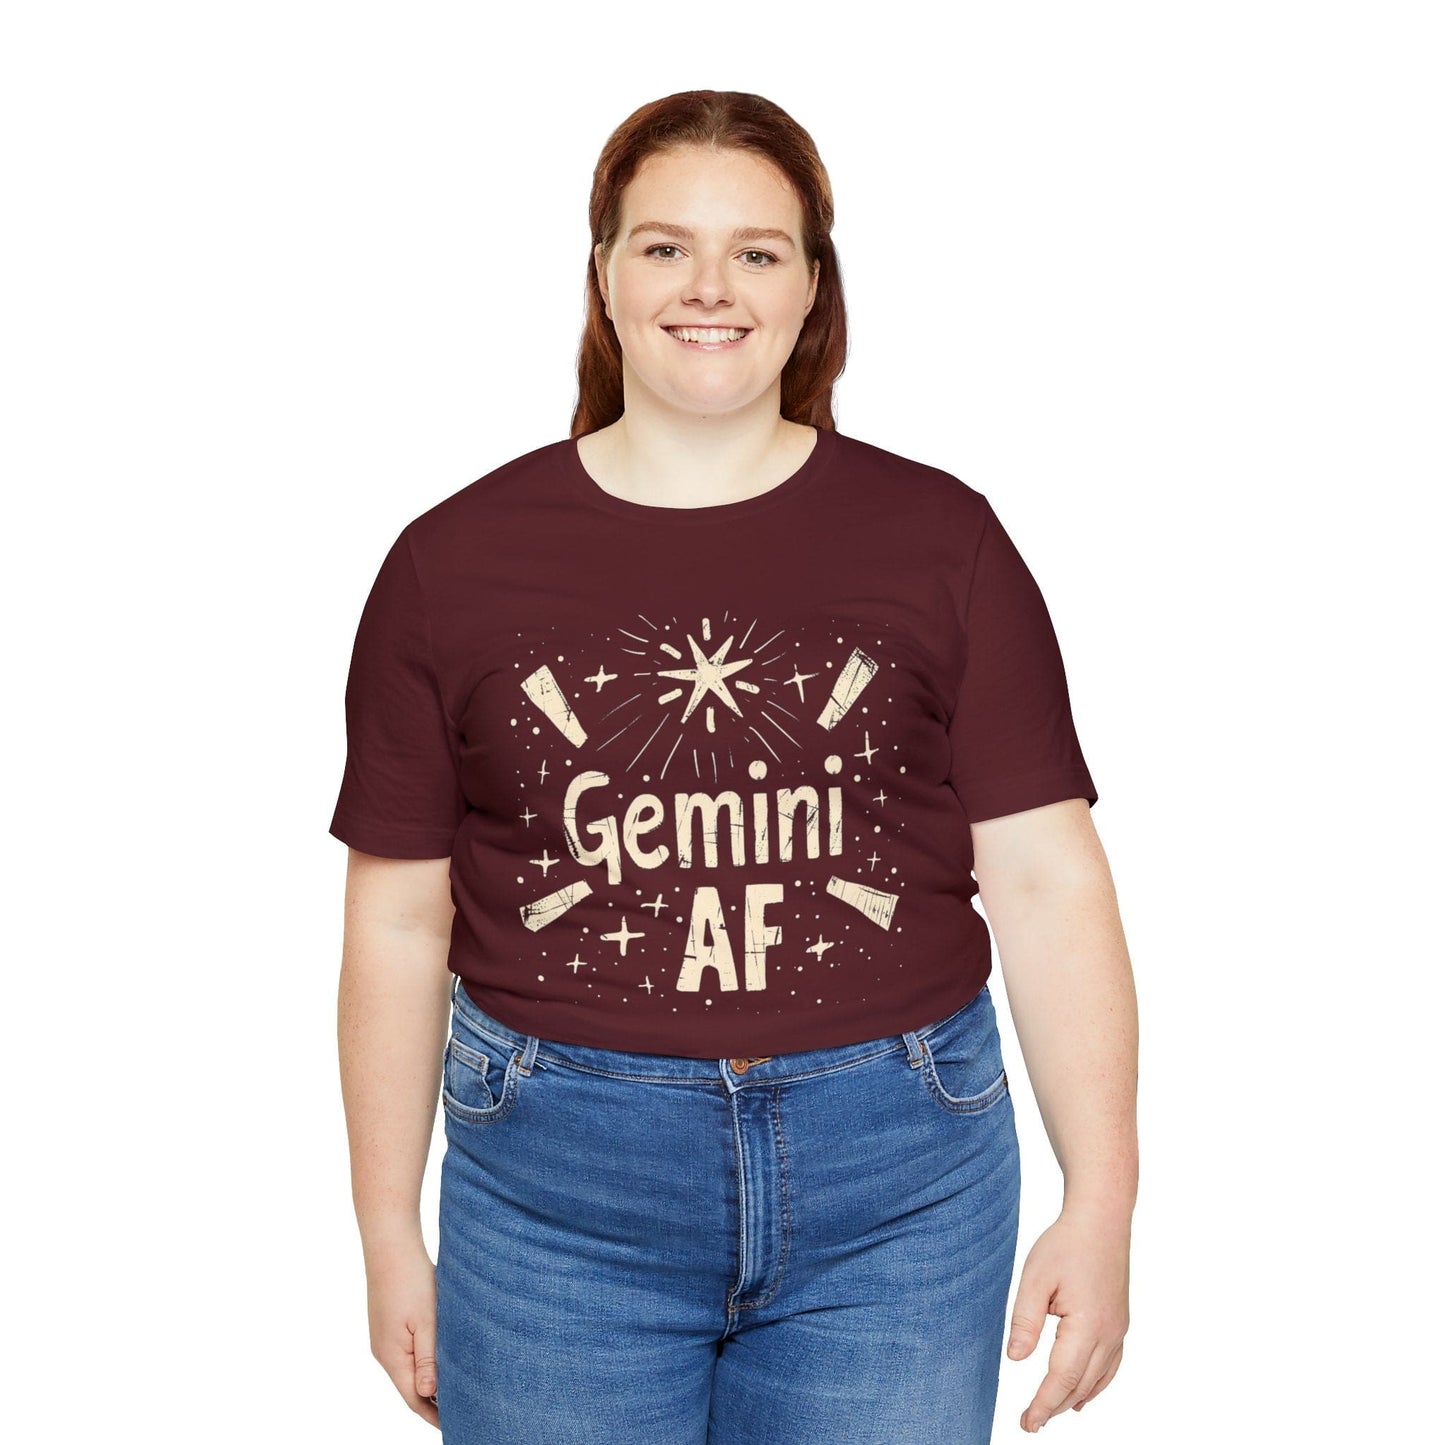 T-Shirt Gemini AF T-Shirt